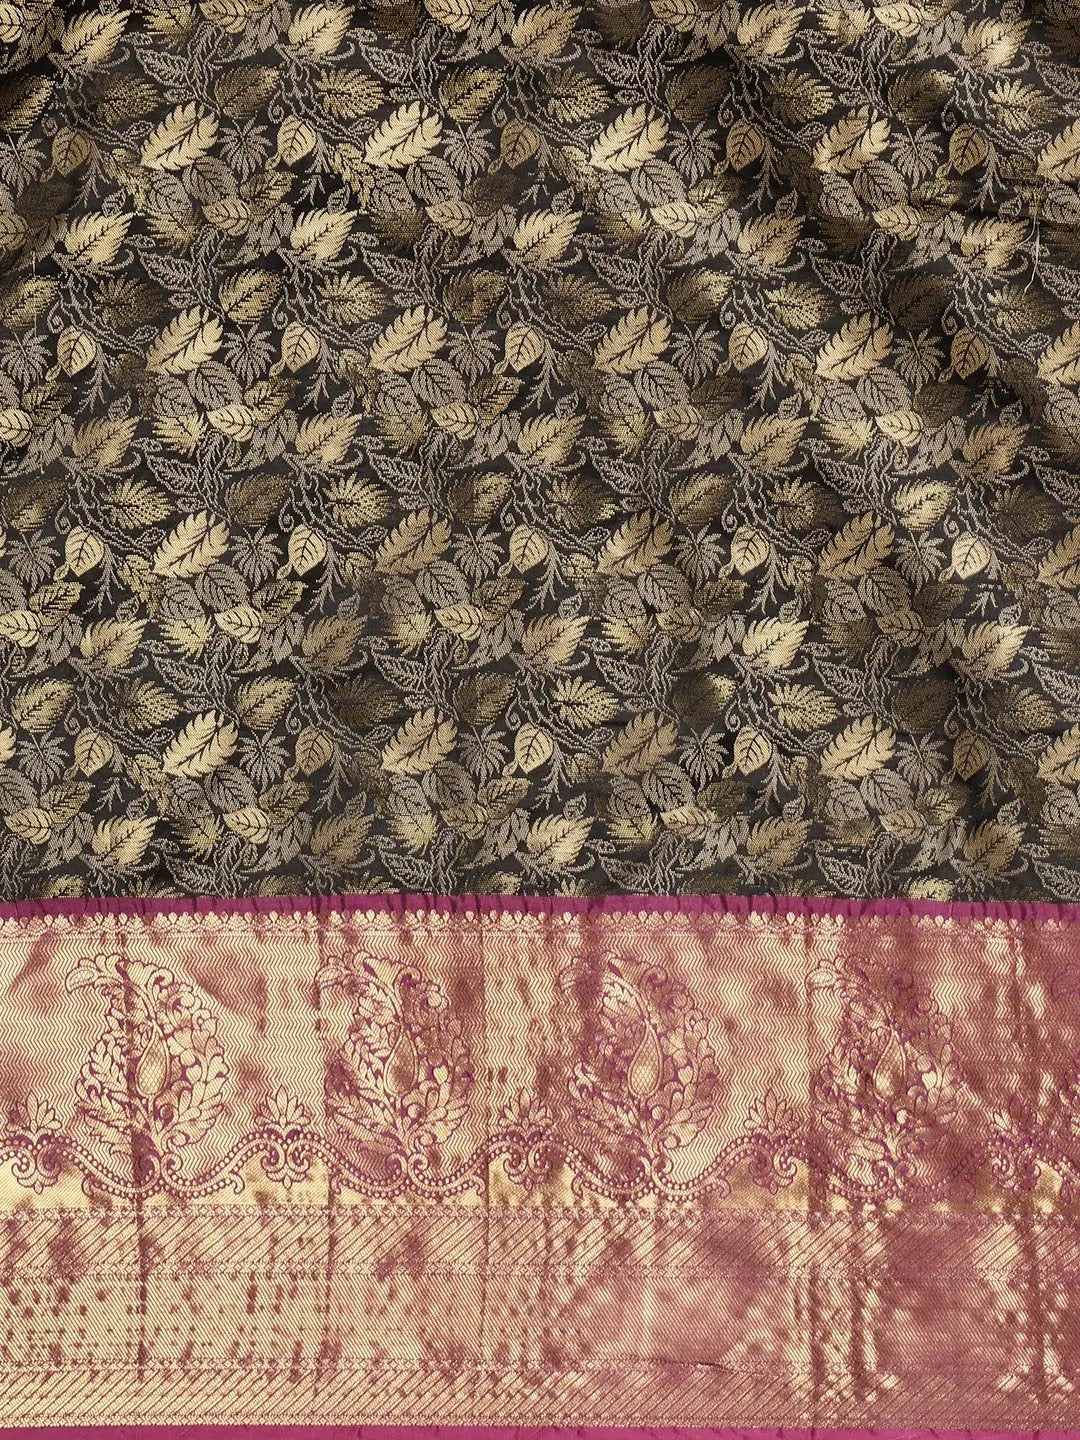 Stylish Kanjivaram Silk Saree Woven Design With Zari Work